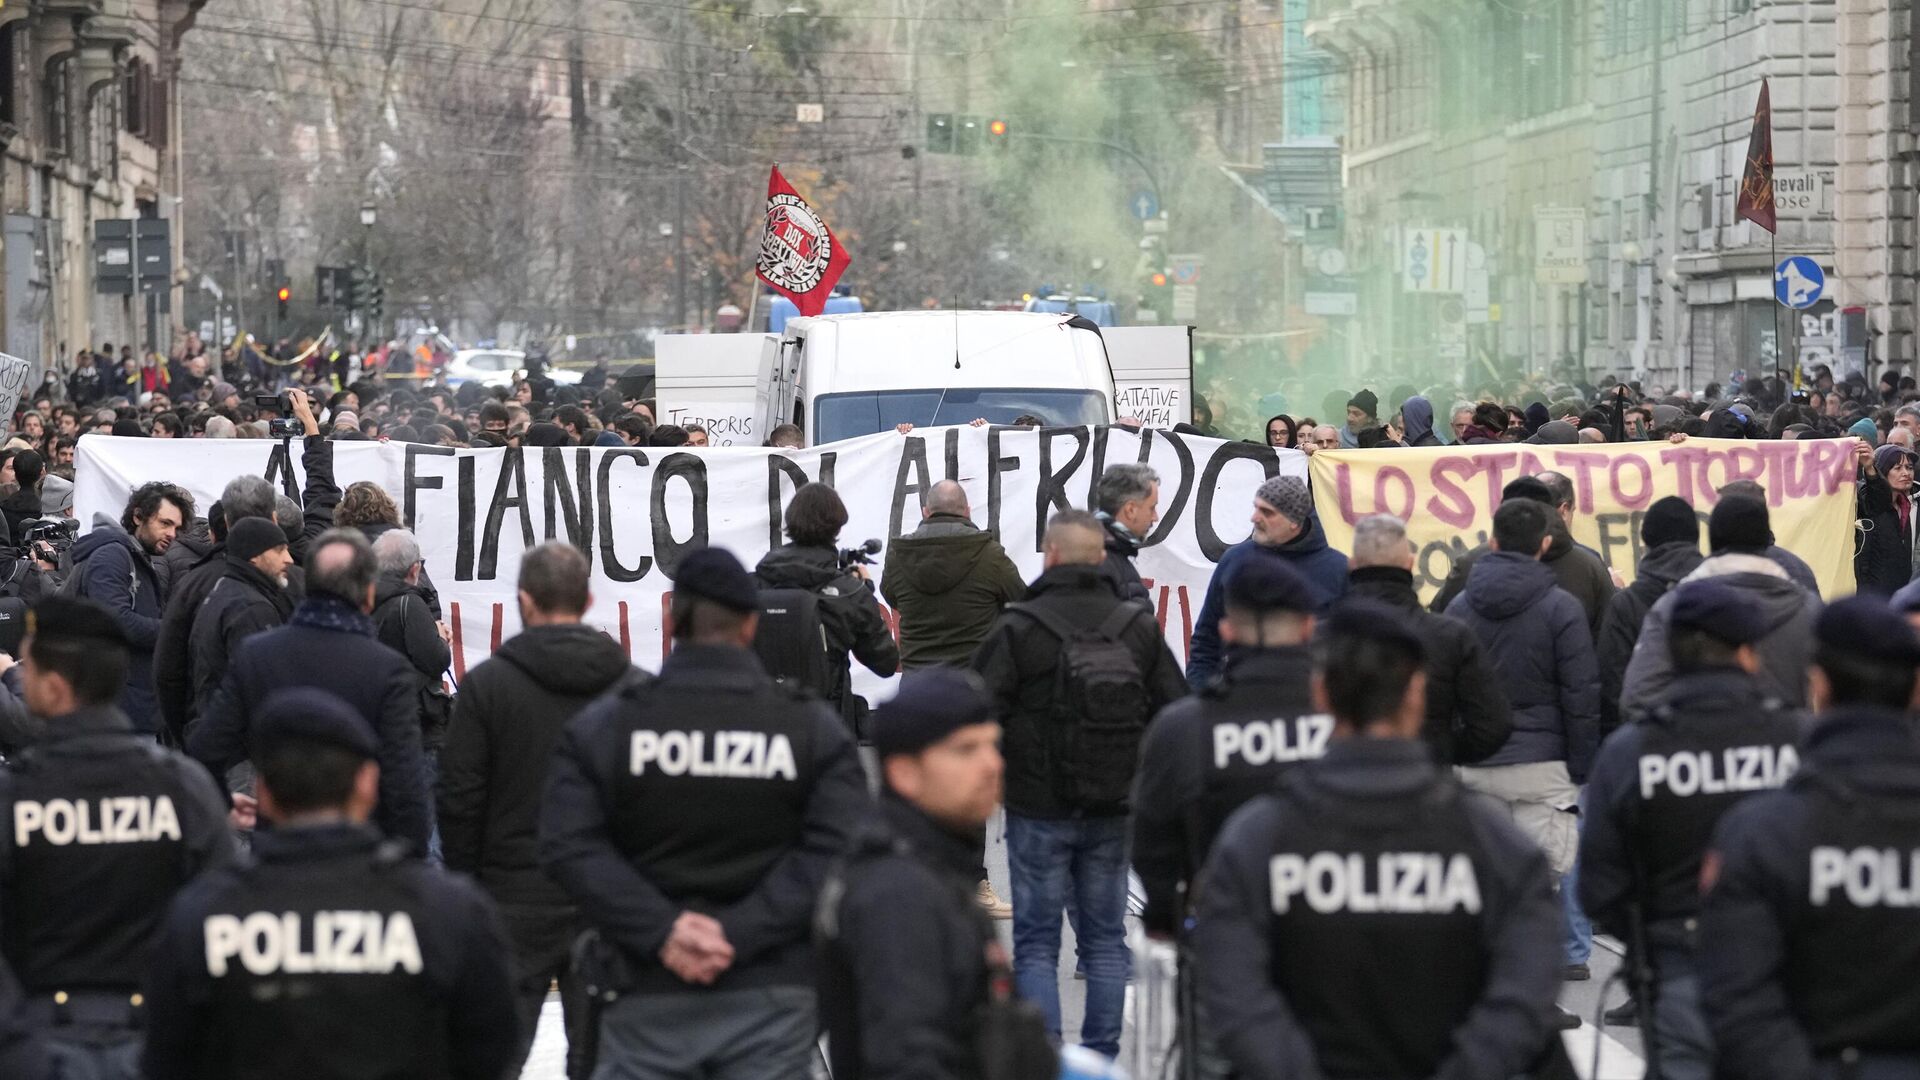 Gelar Protes untuk Caspito, Anarkis Italia Bentrok dengan Polisi